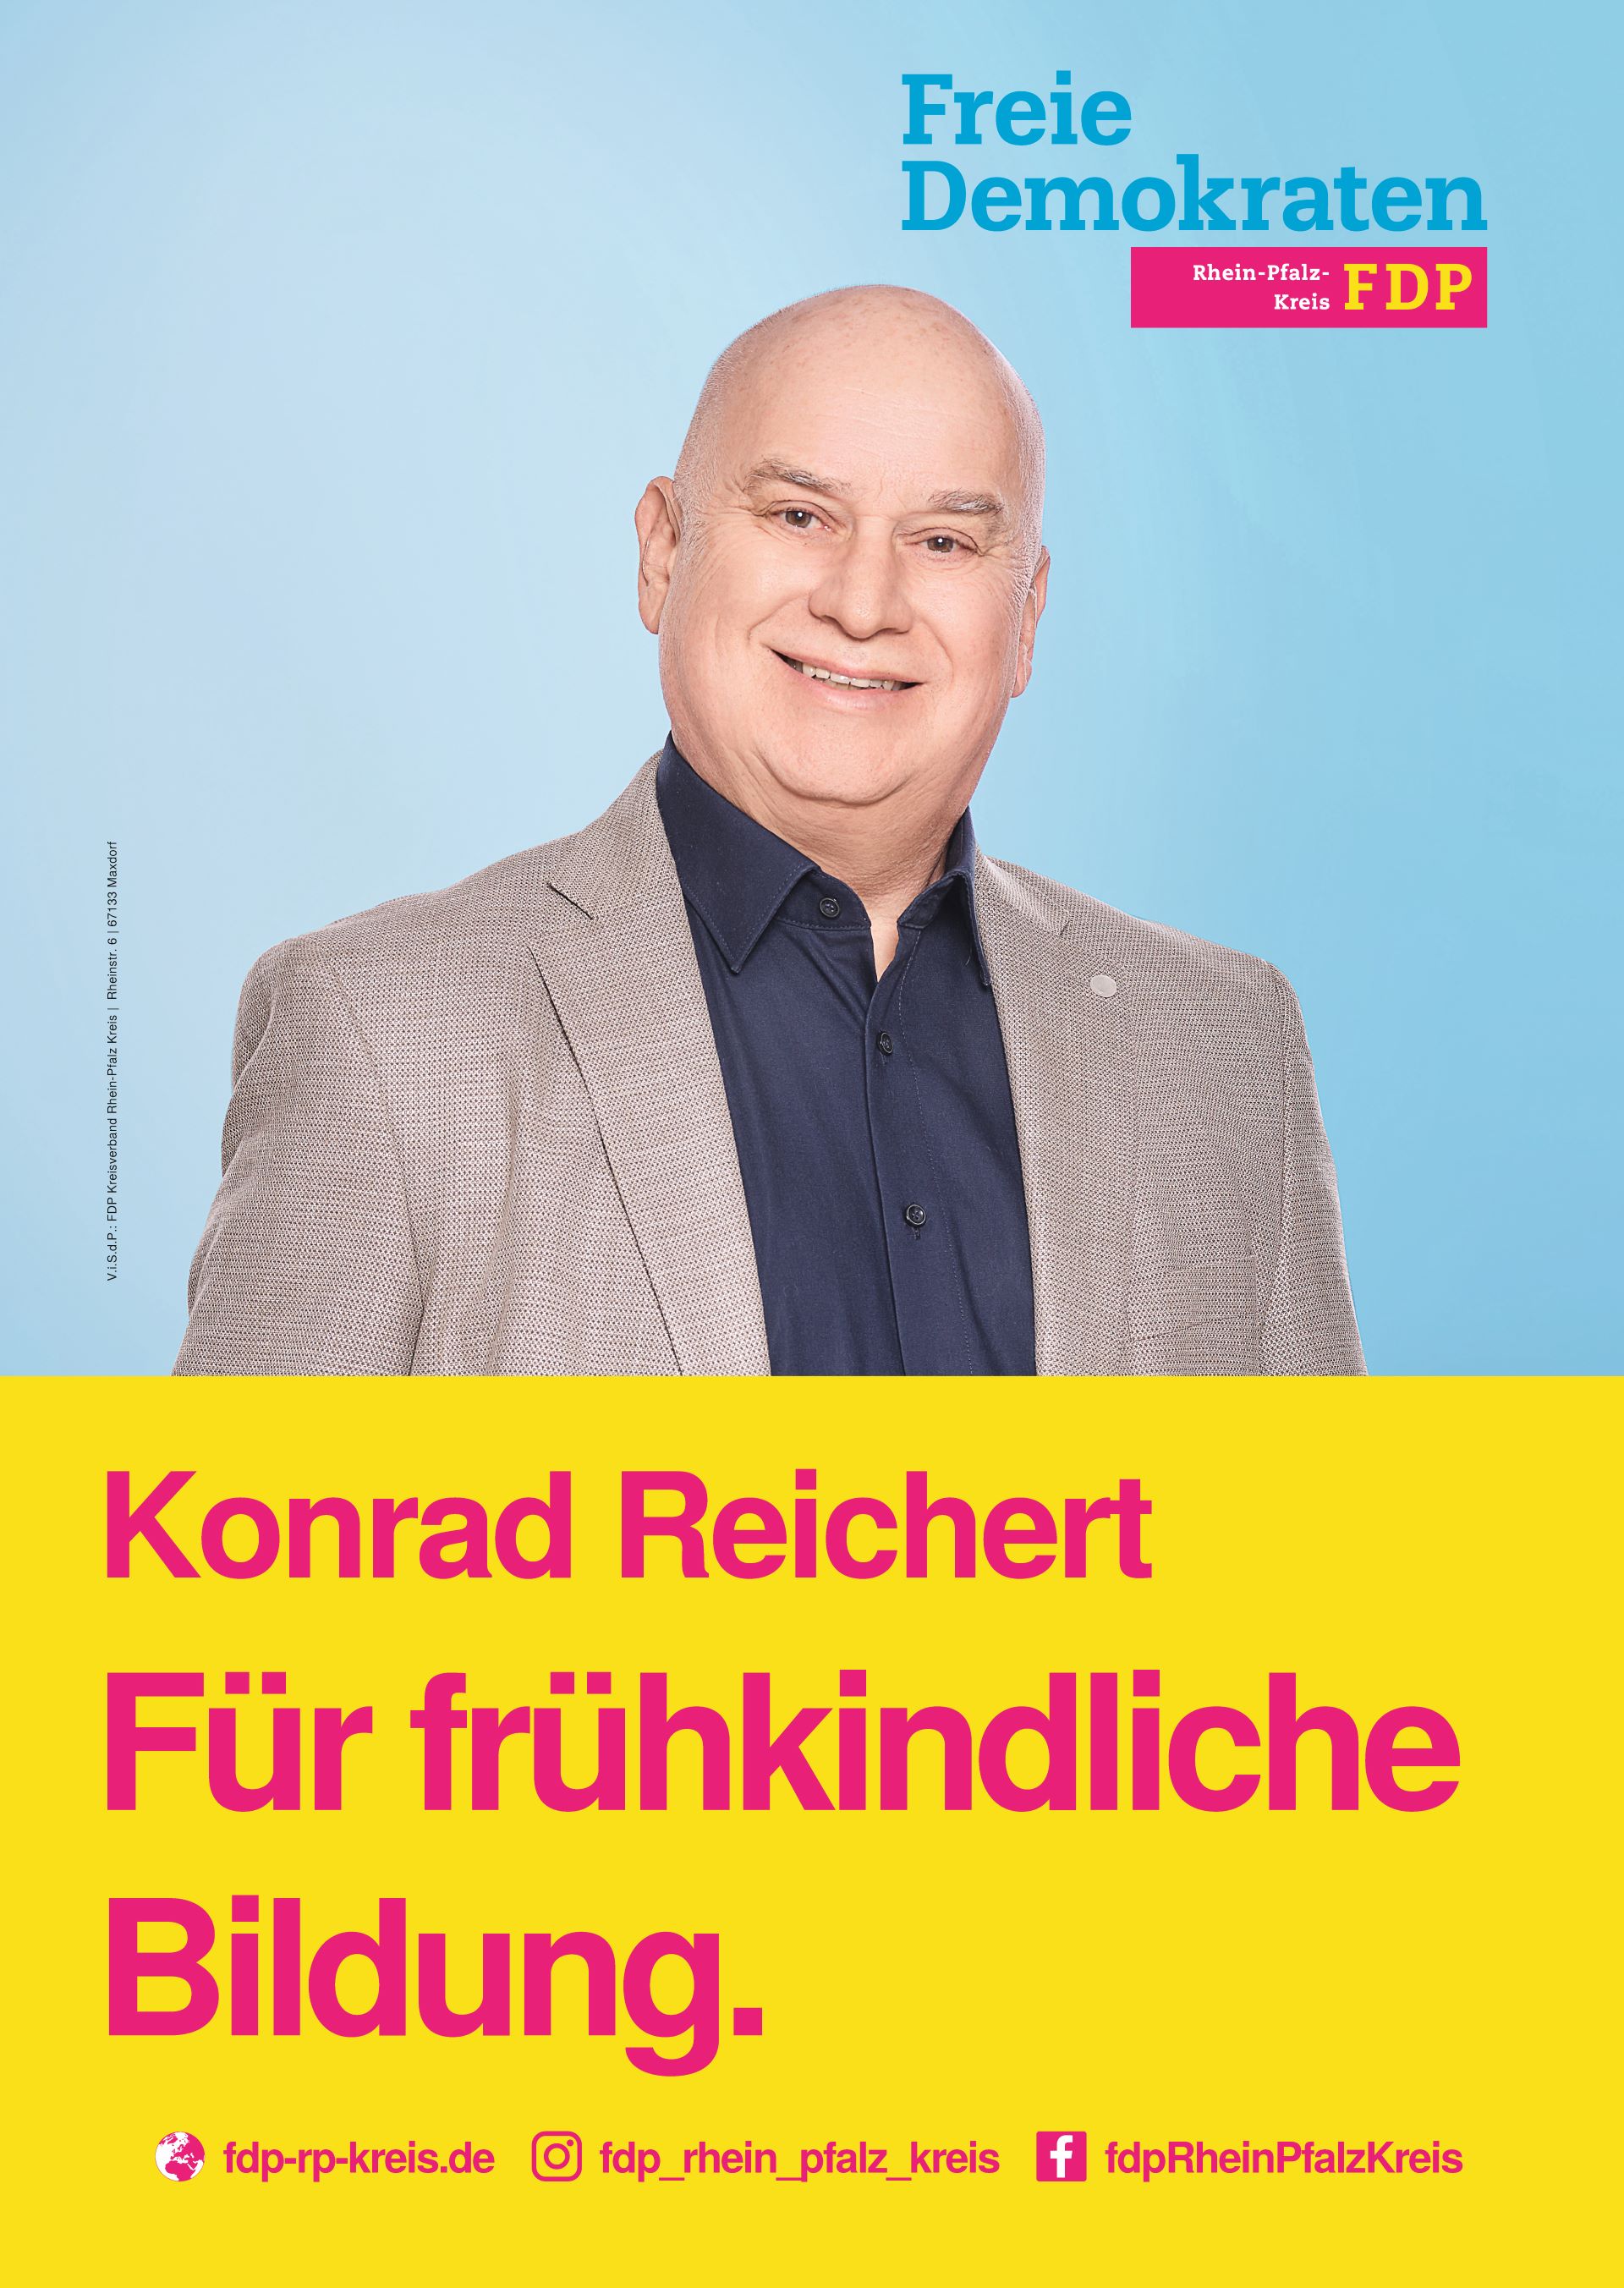 Konrad Reichert FDP 